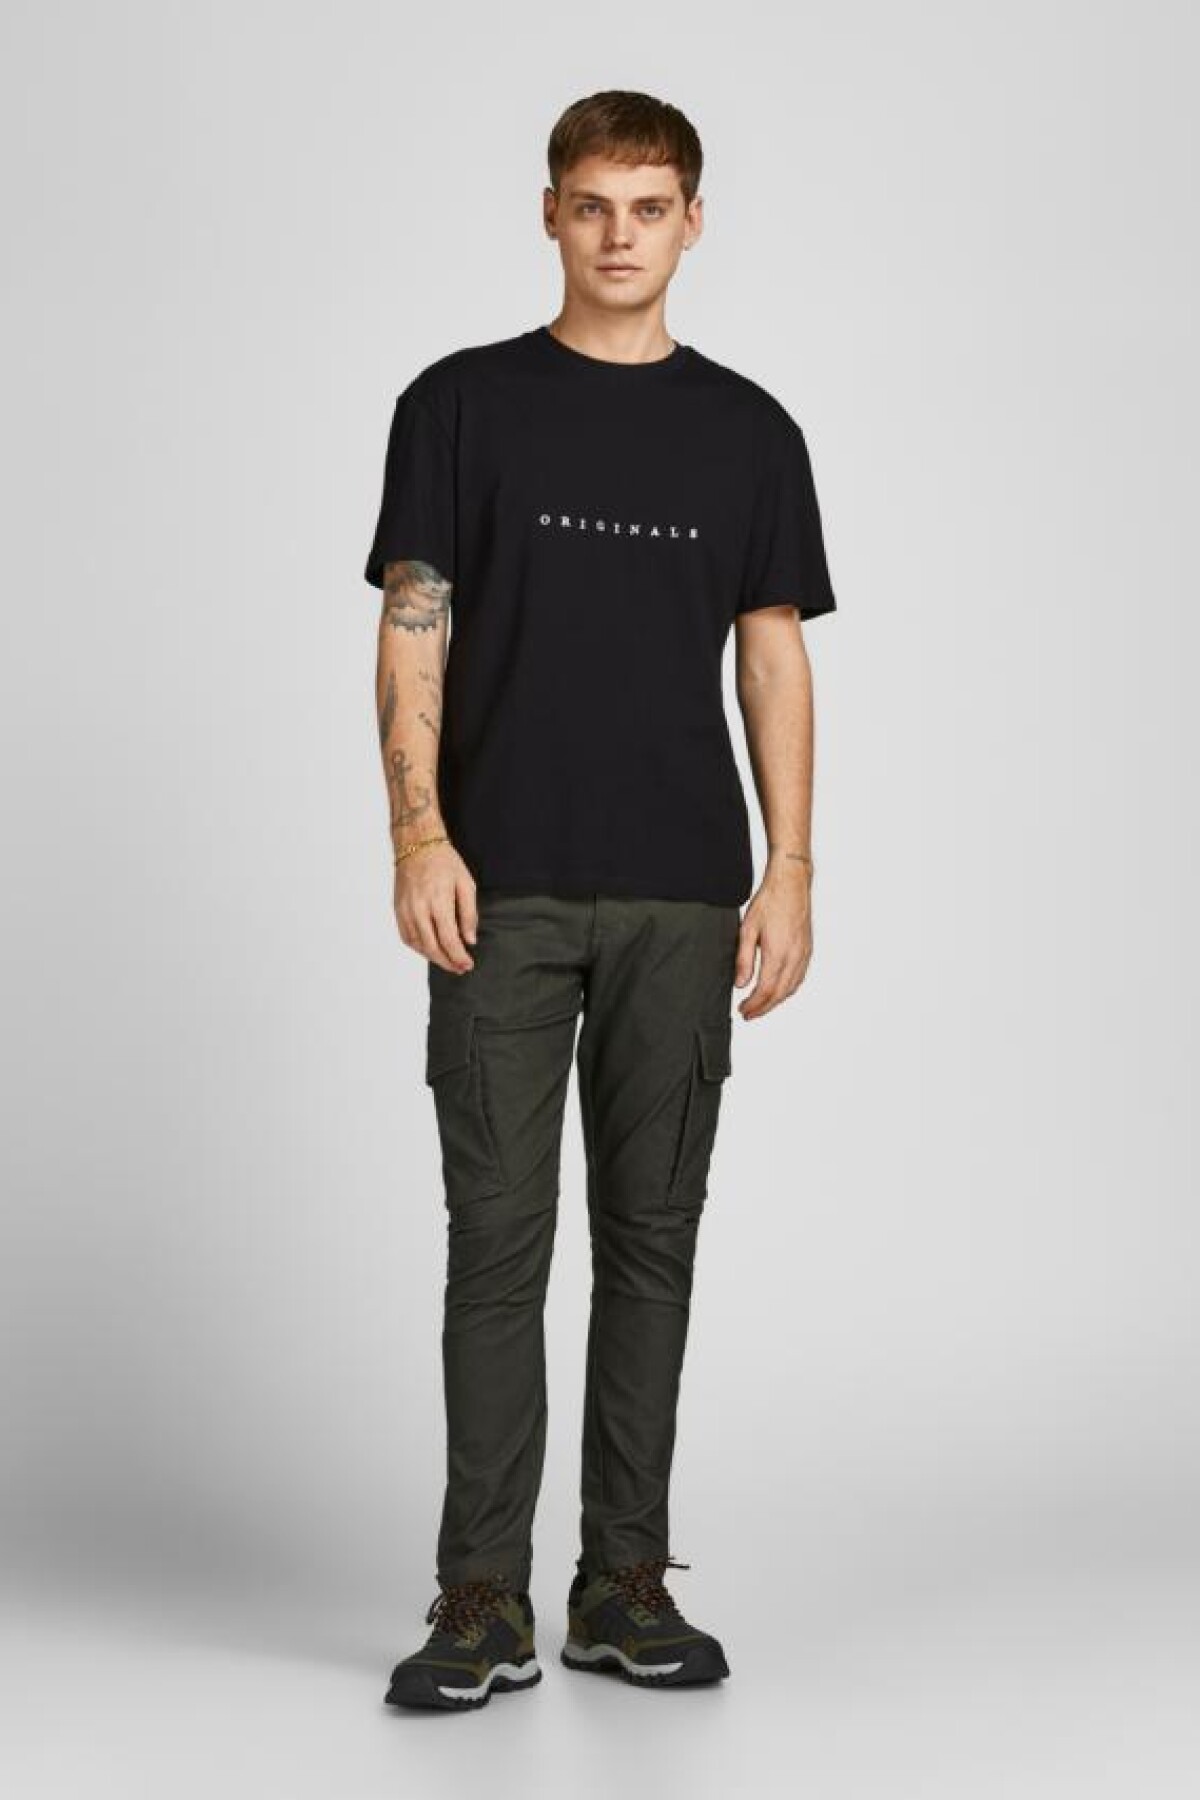 Camiseta Copenhagen Clásica Black